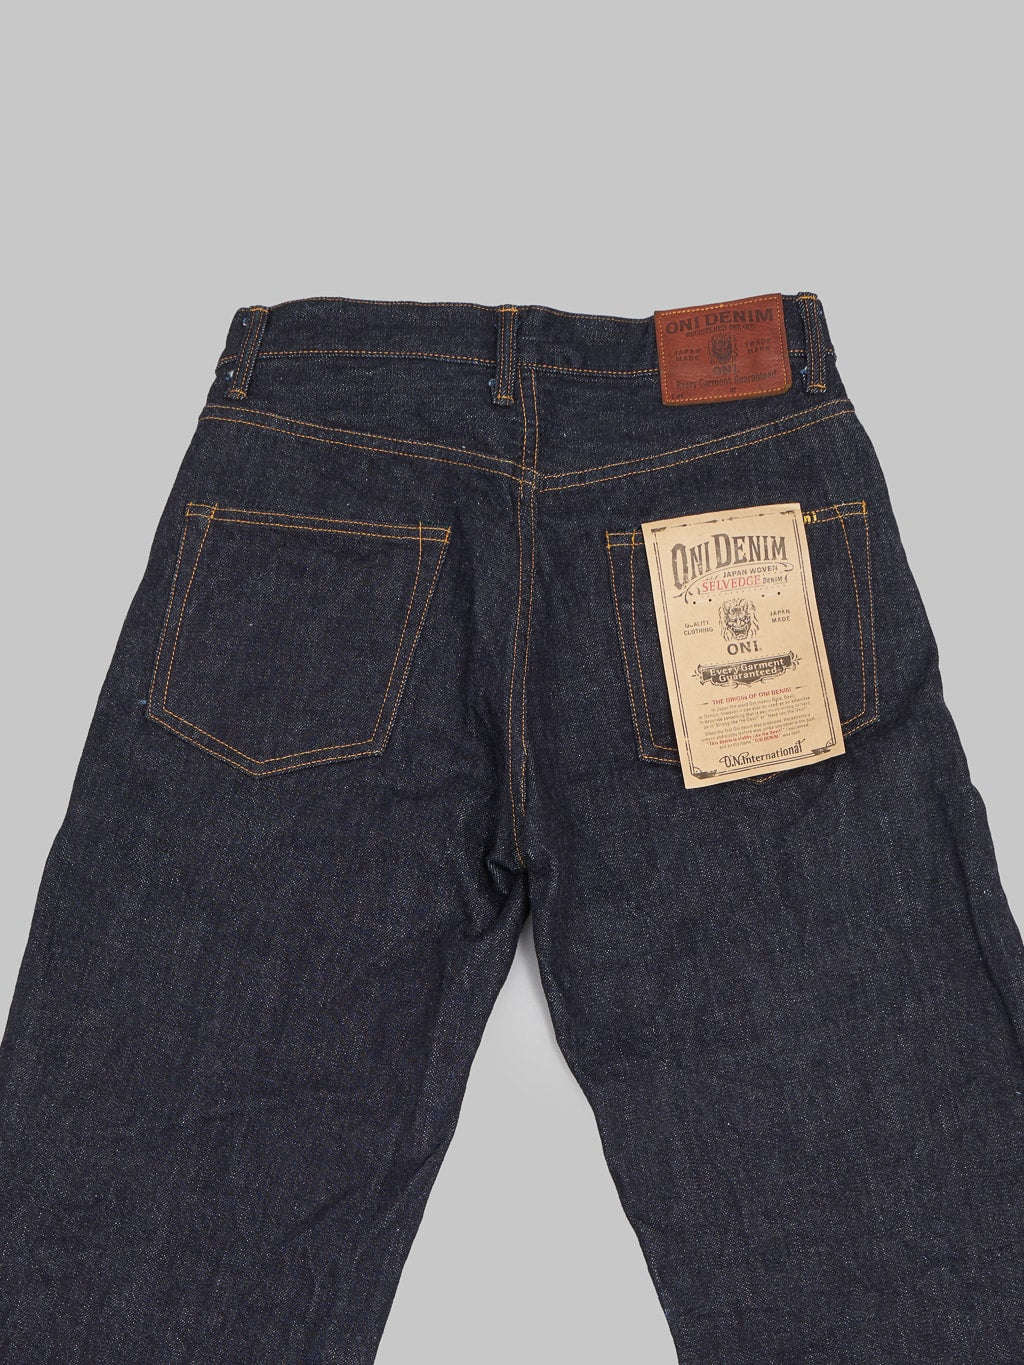 ONI Denim 222 Low Tension Super Wide Straight Jeans back details